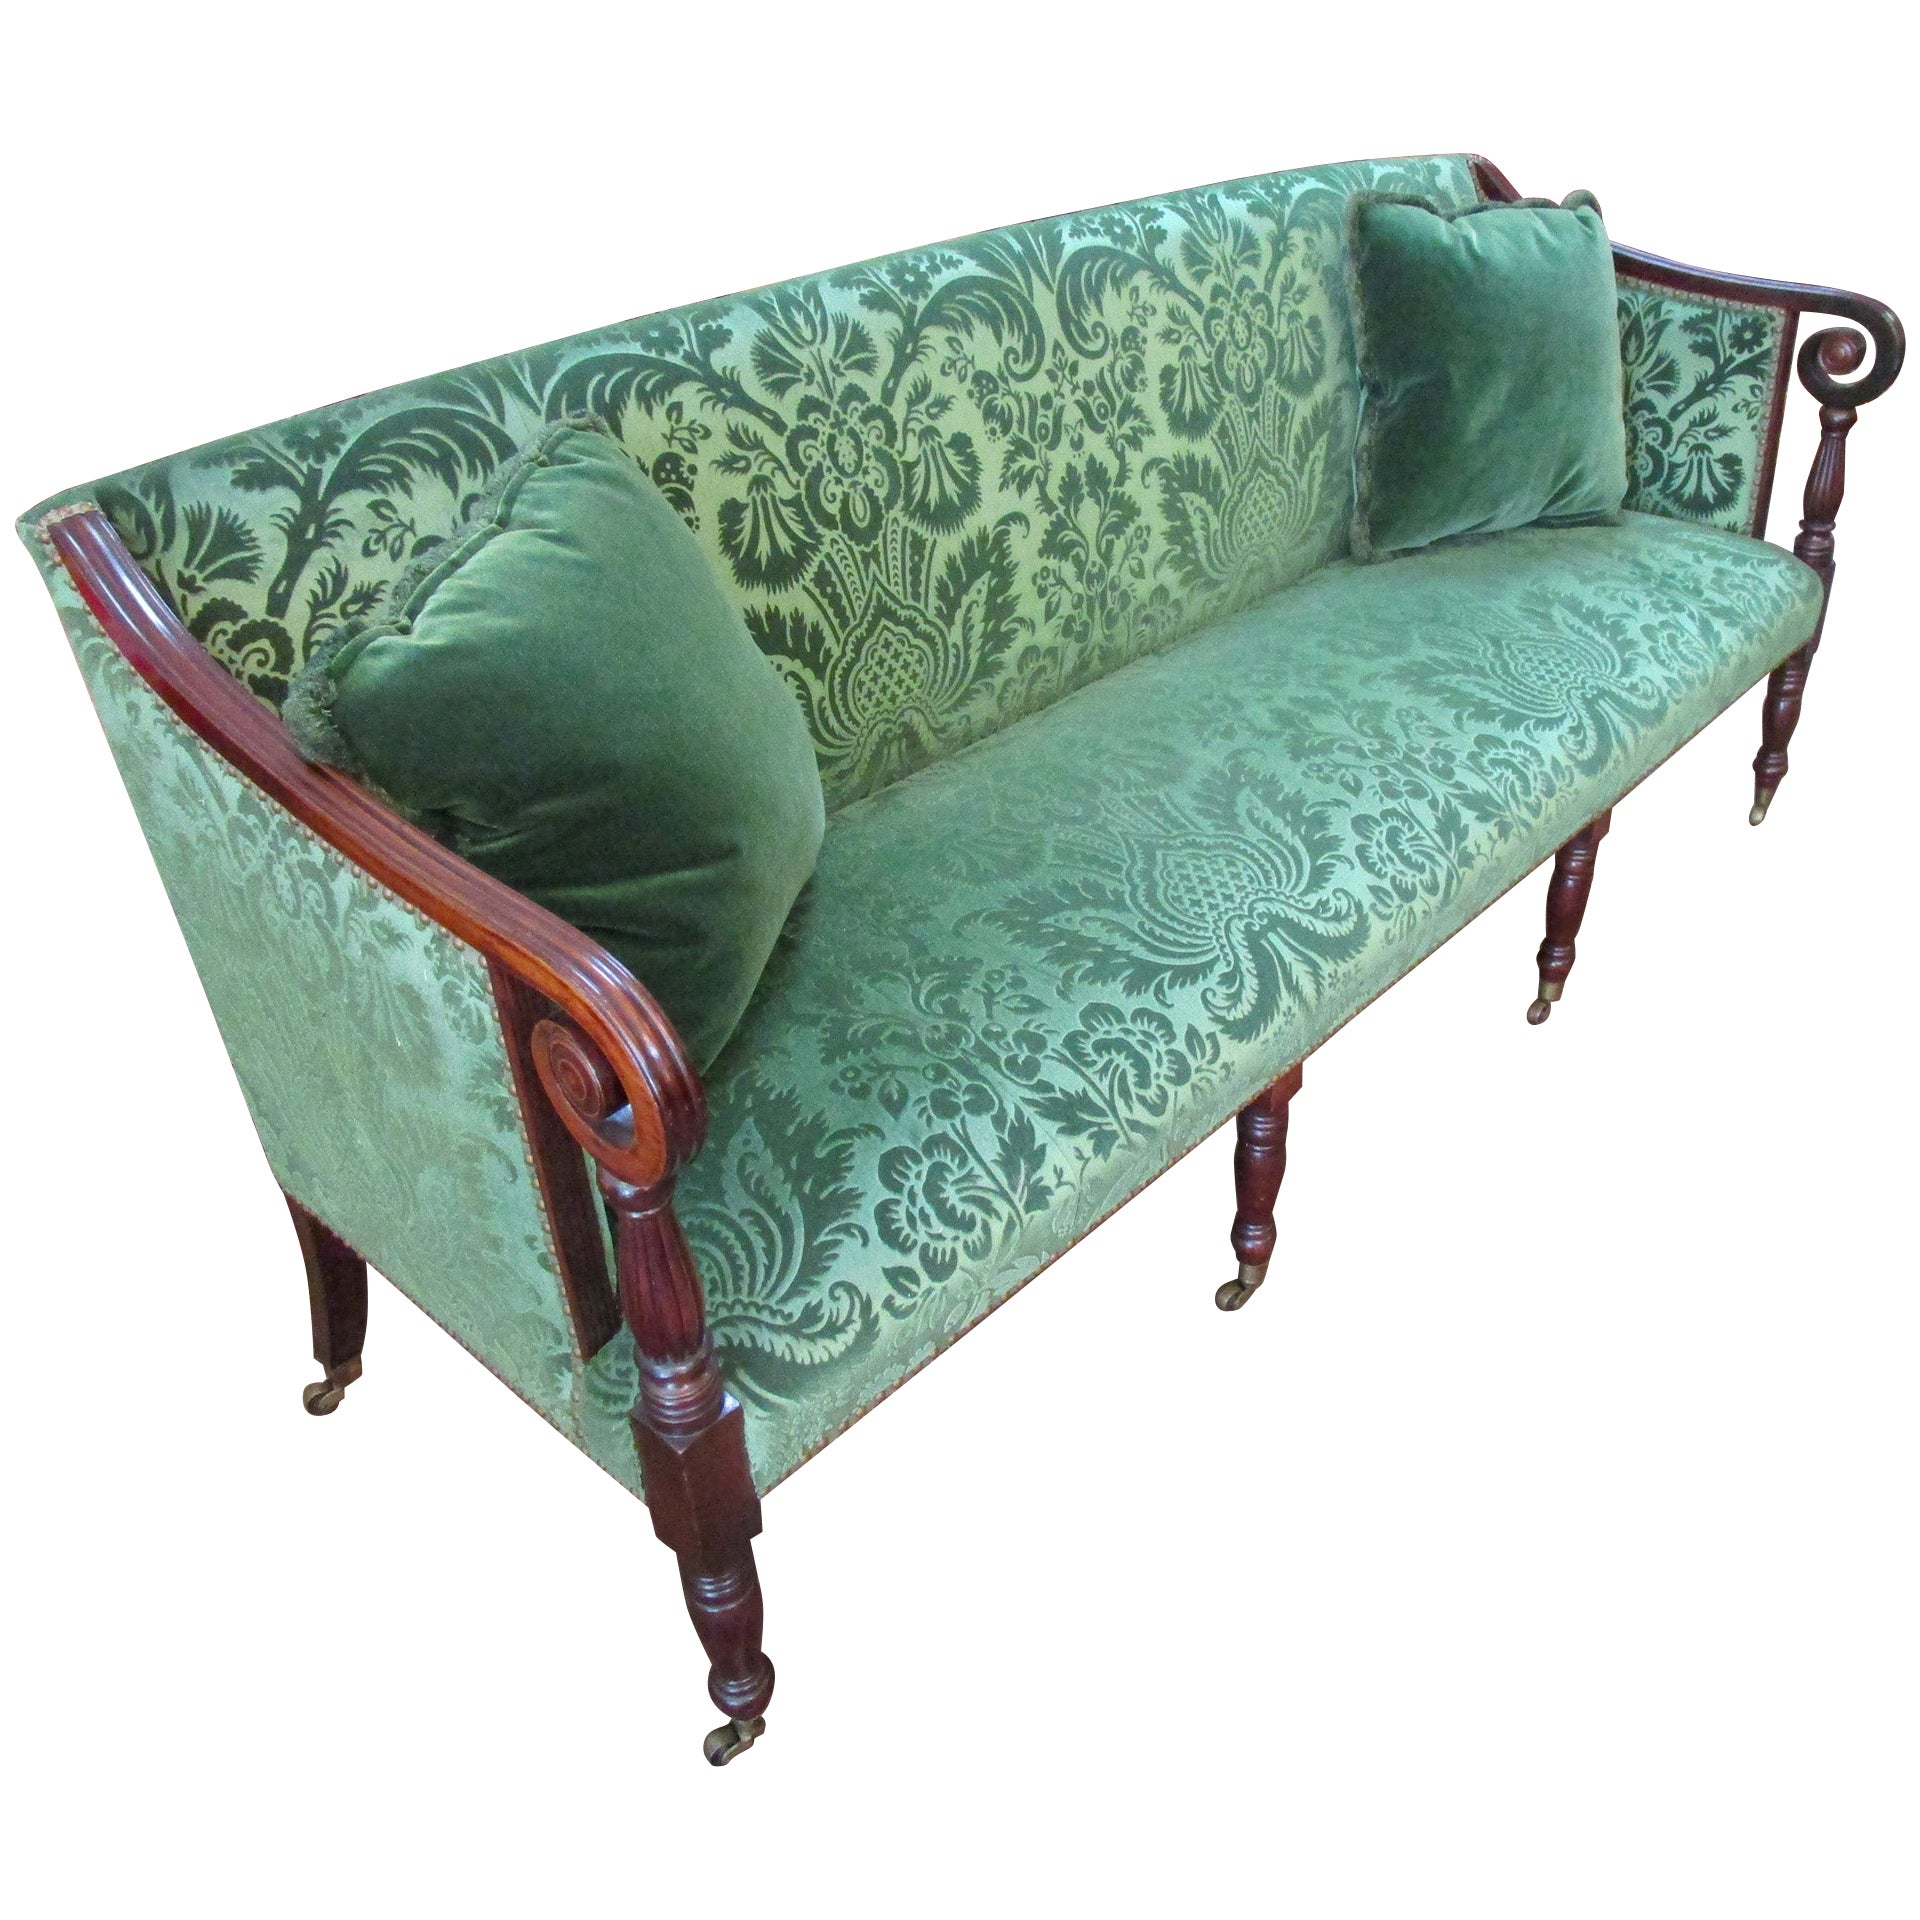 Sheraton English Carved Mahogany Upholstered Sofa circa 1820 